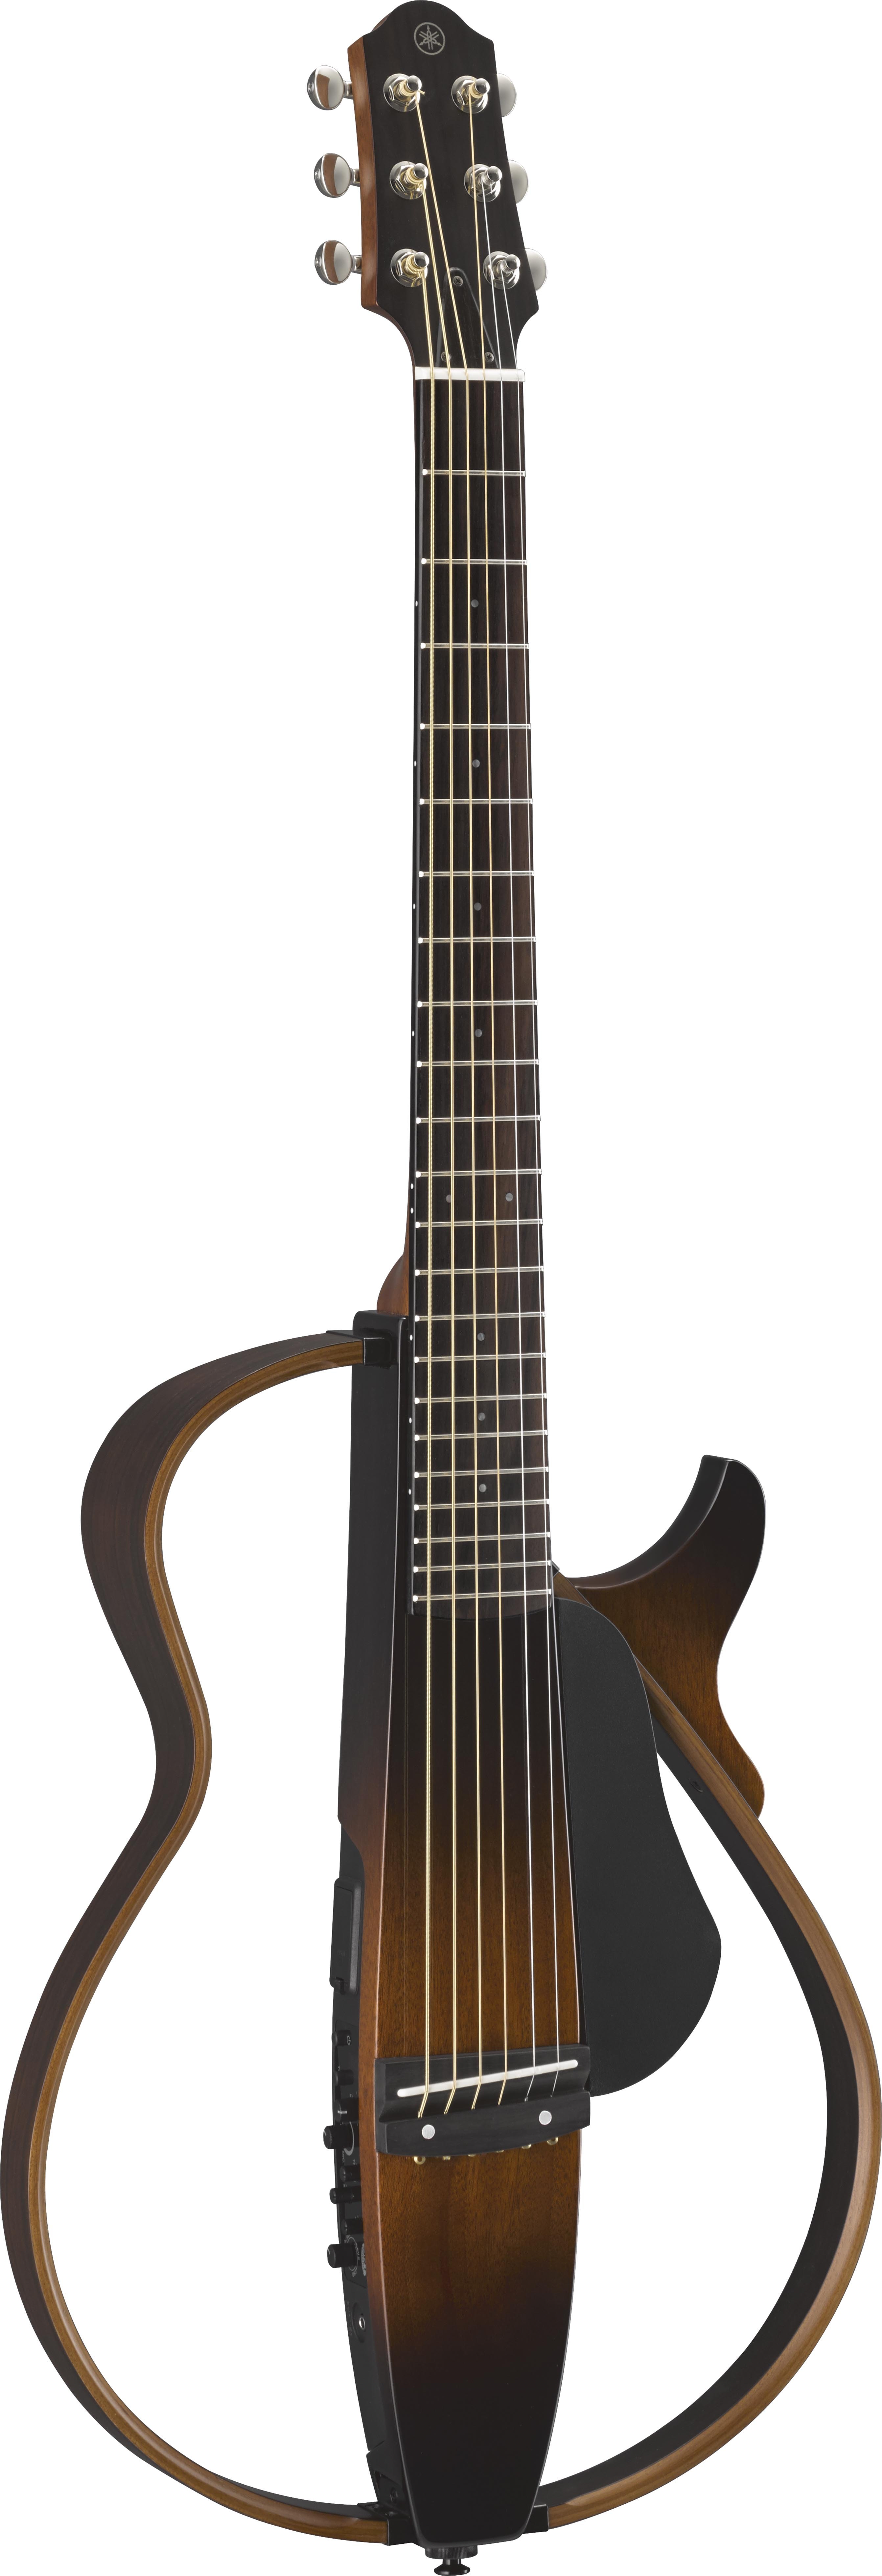 SLG200 Series - サイレントギター™ - 仕様 - ヤマハ